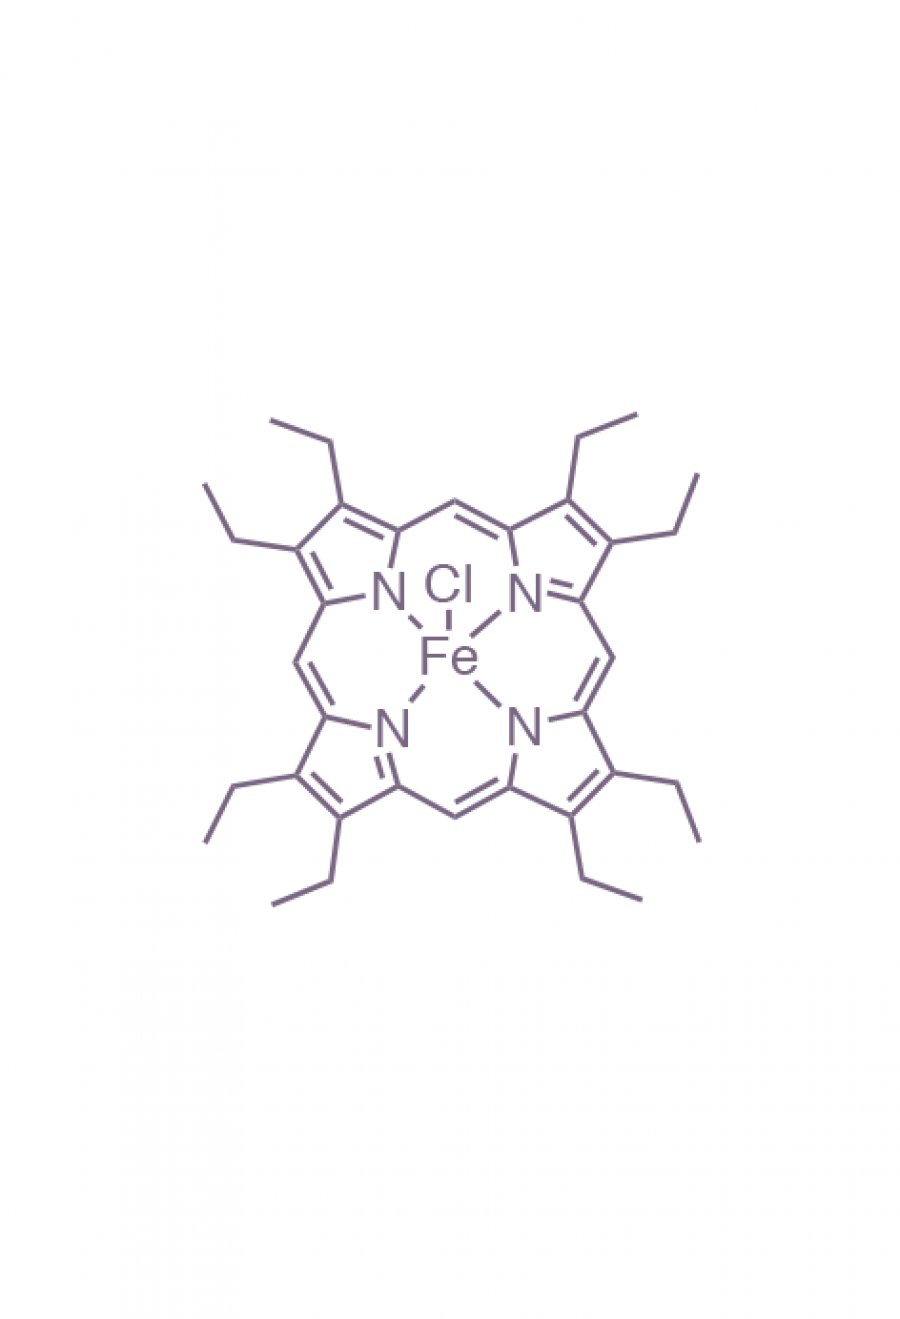 iron(III) 2,3,7,8,12,13,17,18-(octaethyl)porphyrin chloride  | Porphychem Expert porphyrin synthesis for research & industry